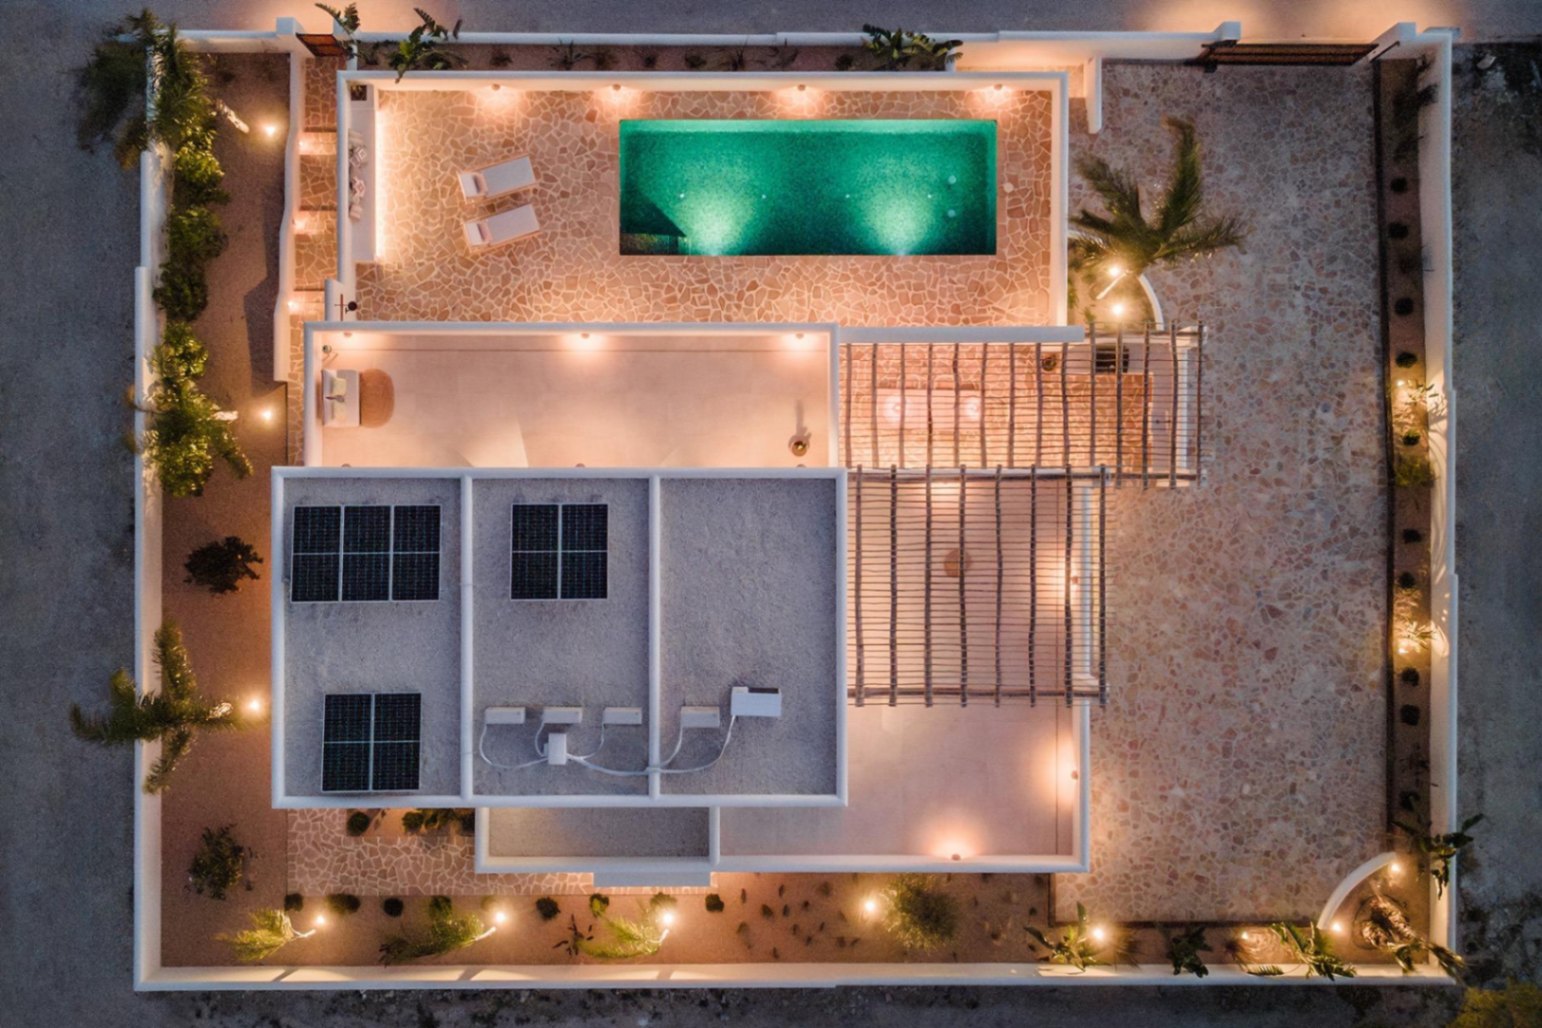 Nouvelle villa de style Ibiza clé en main